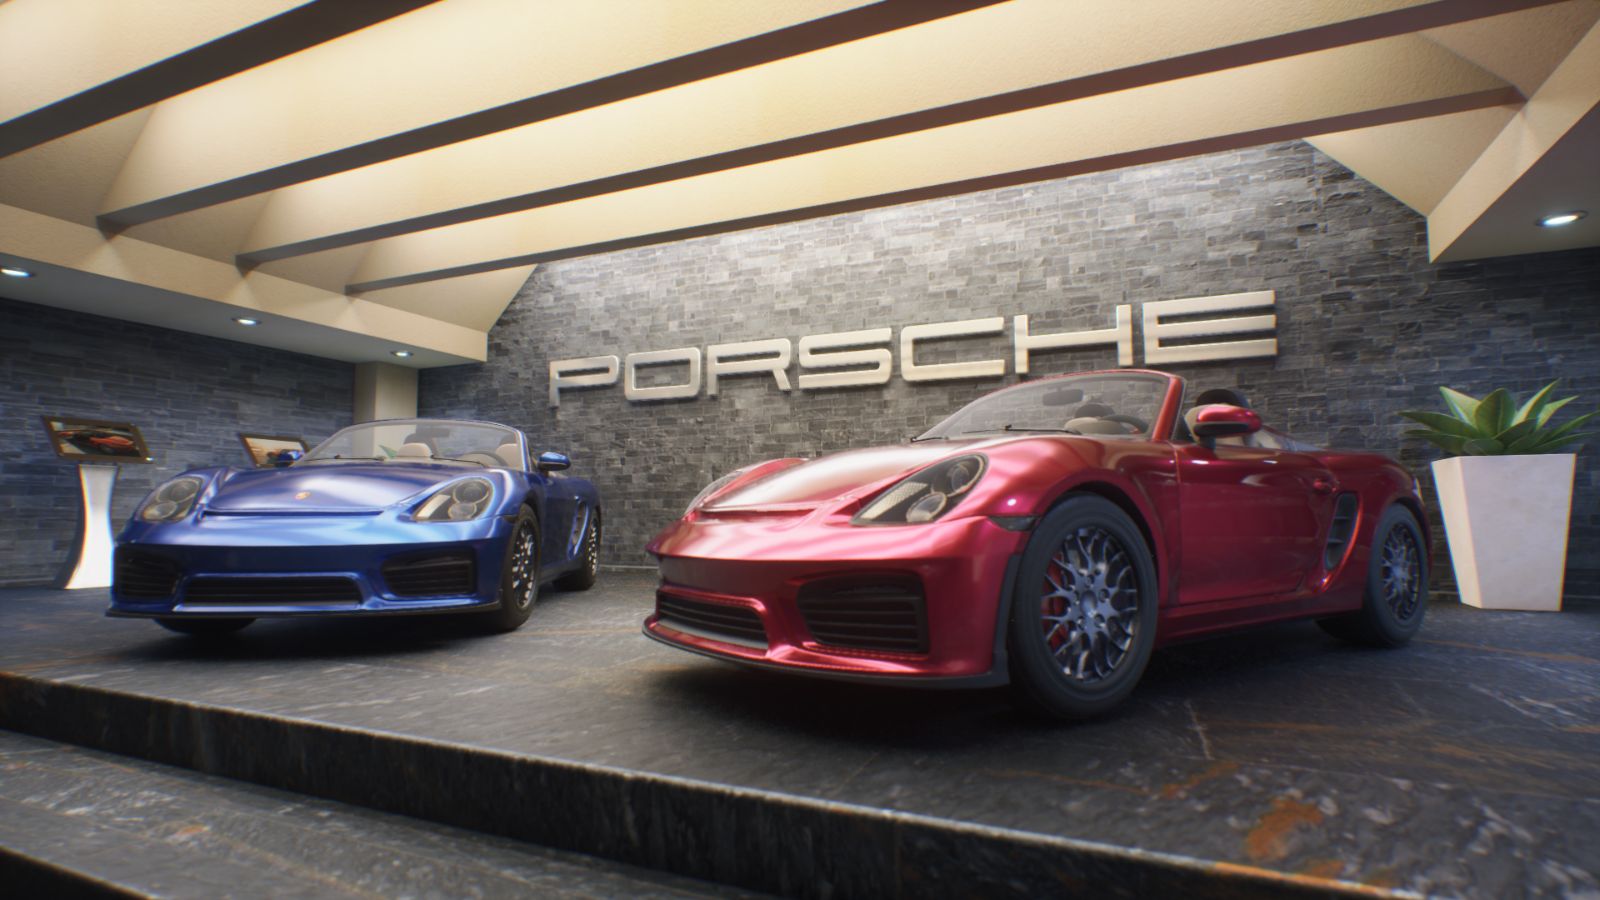 Digital render of two Porsche cars side-by-side in a showroom.